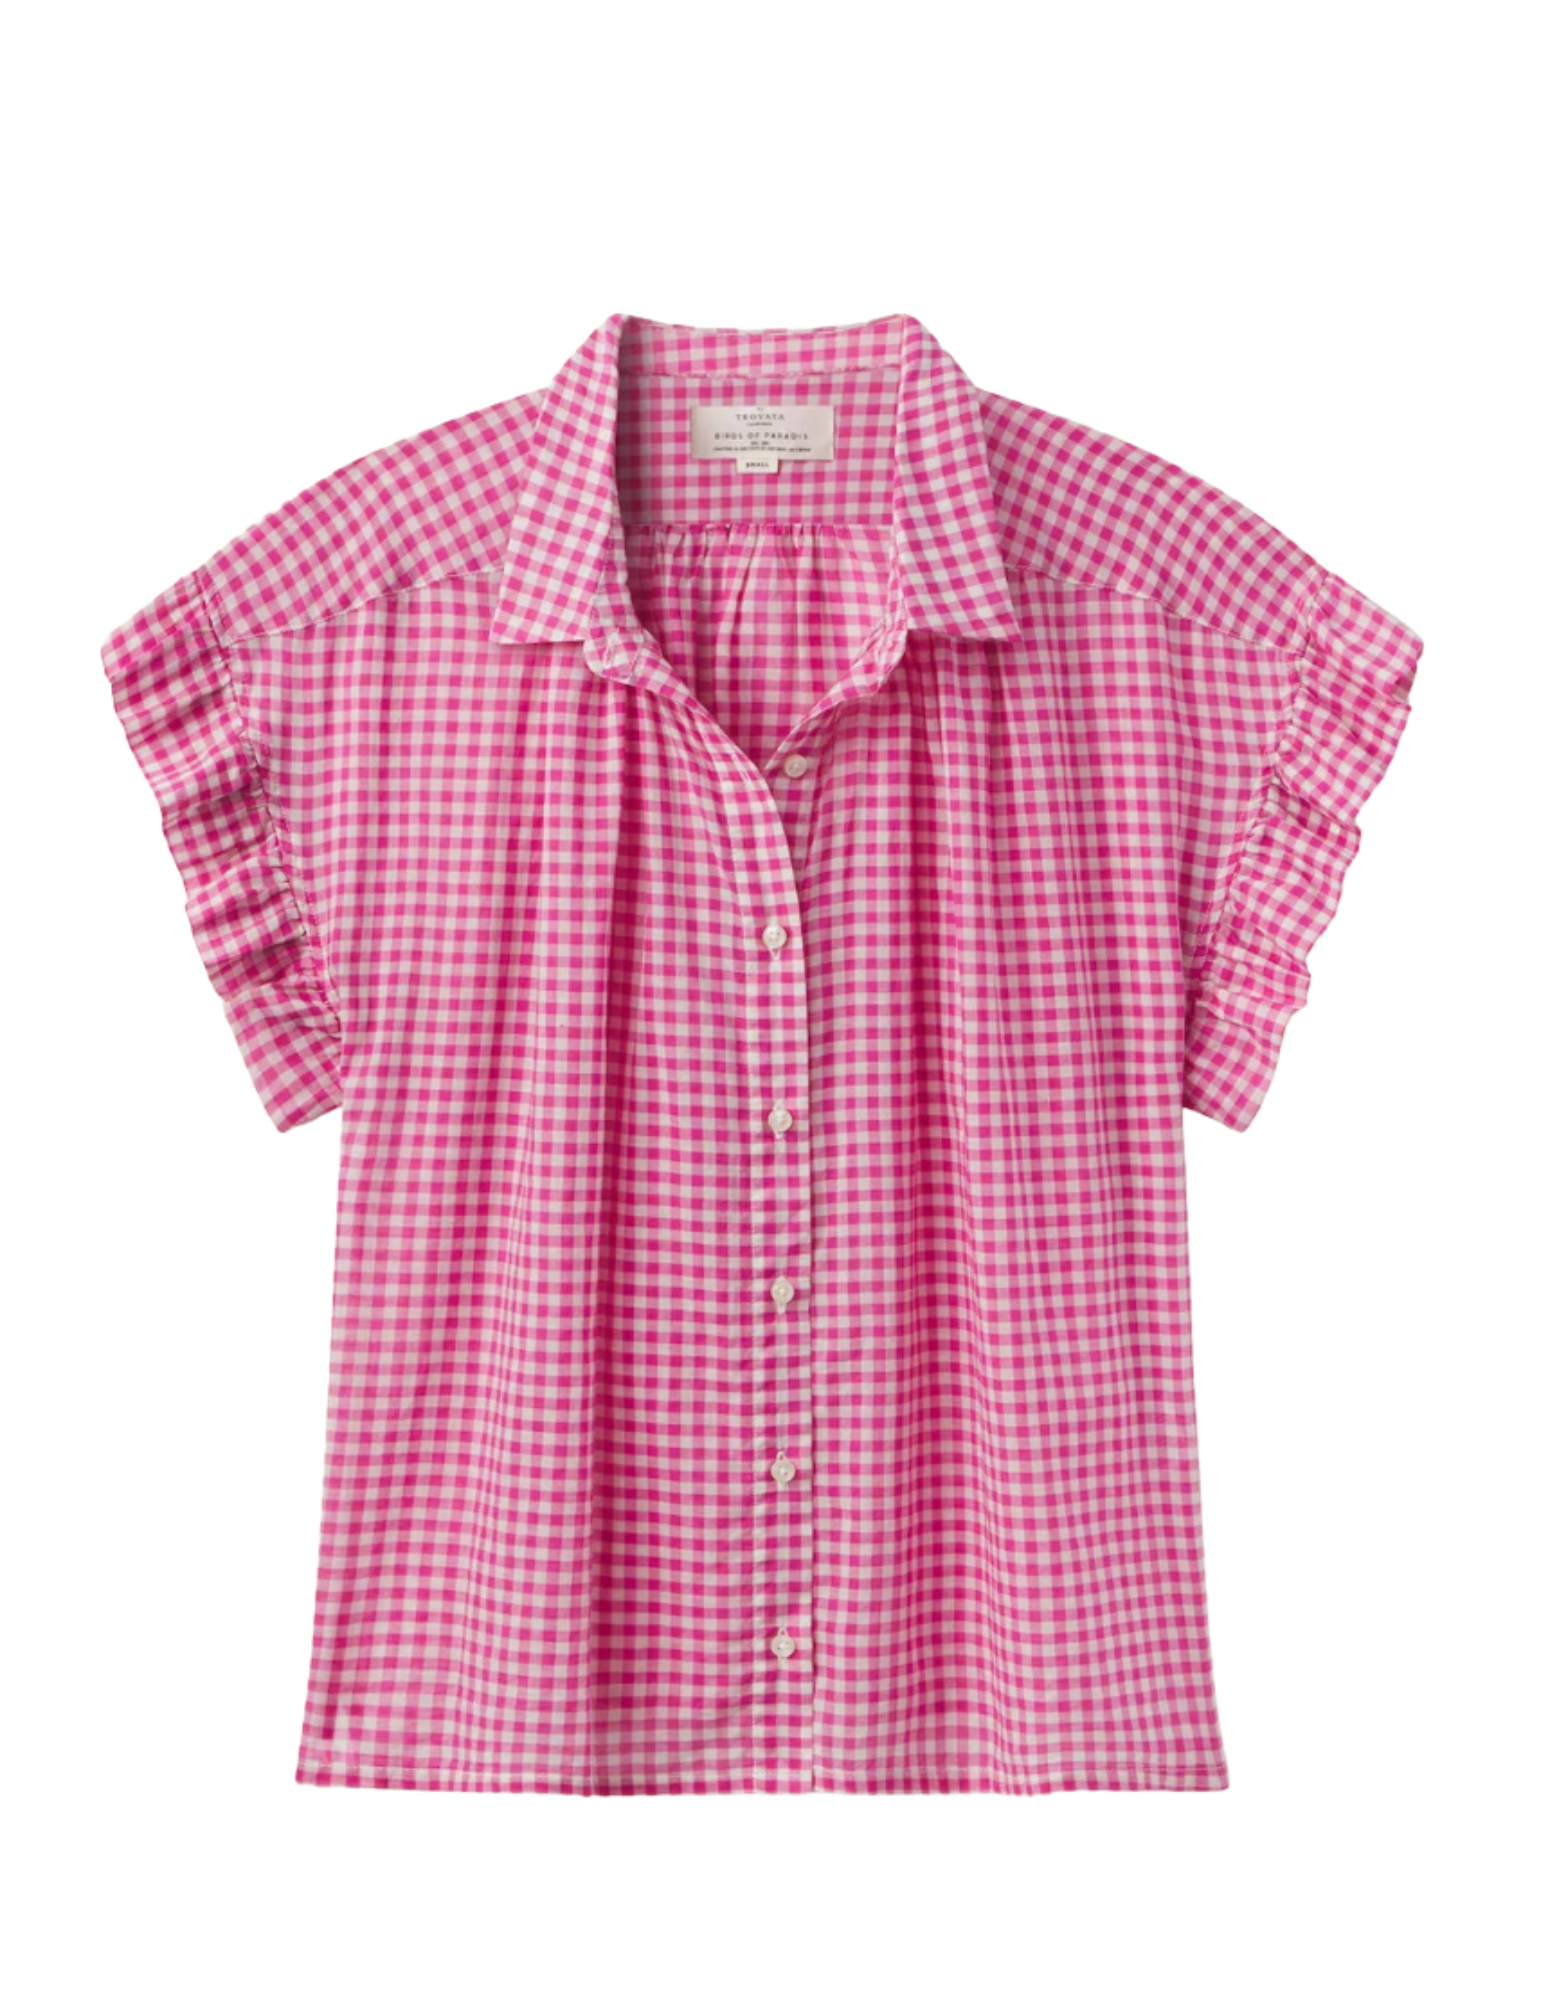 Marianne B Ruffle Sleeve Shirt - Raspberry Check